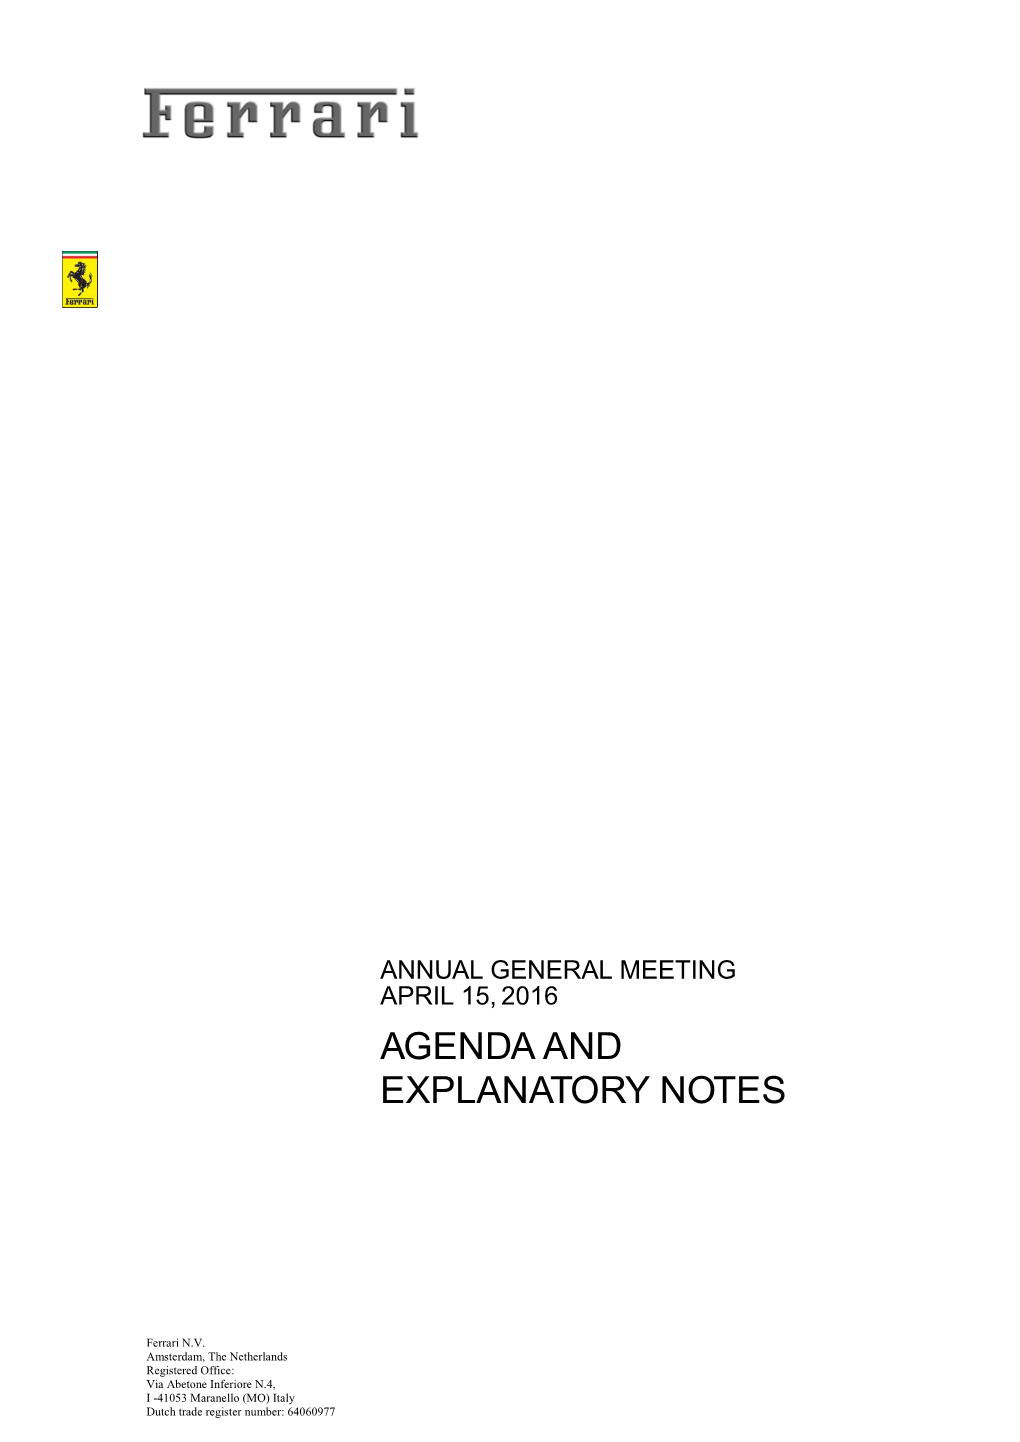 Agenda and Explanatory Notes